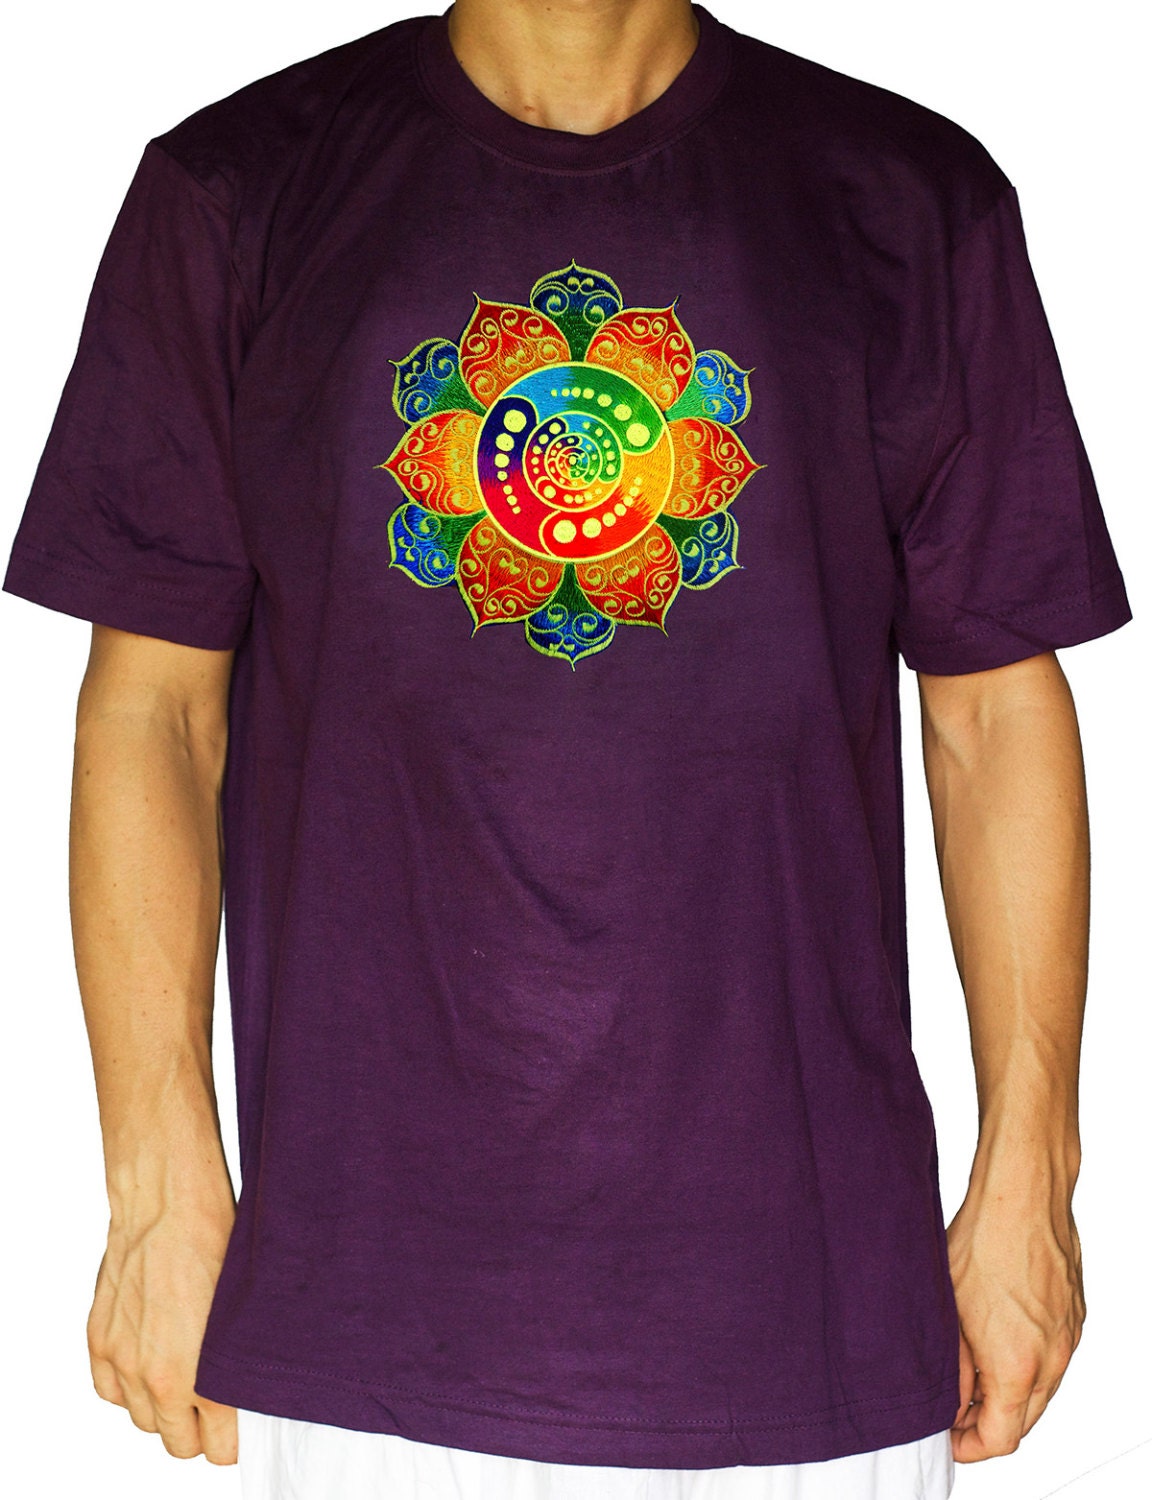 crop circle mandala Shirt "Attributes" rainbow celtic blacklight handmade embroidery no print goa t-shirt